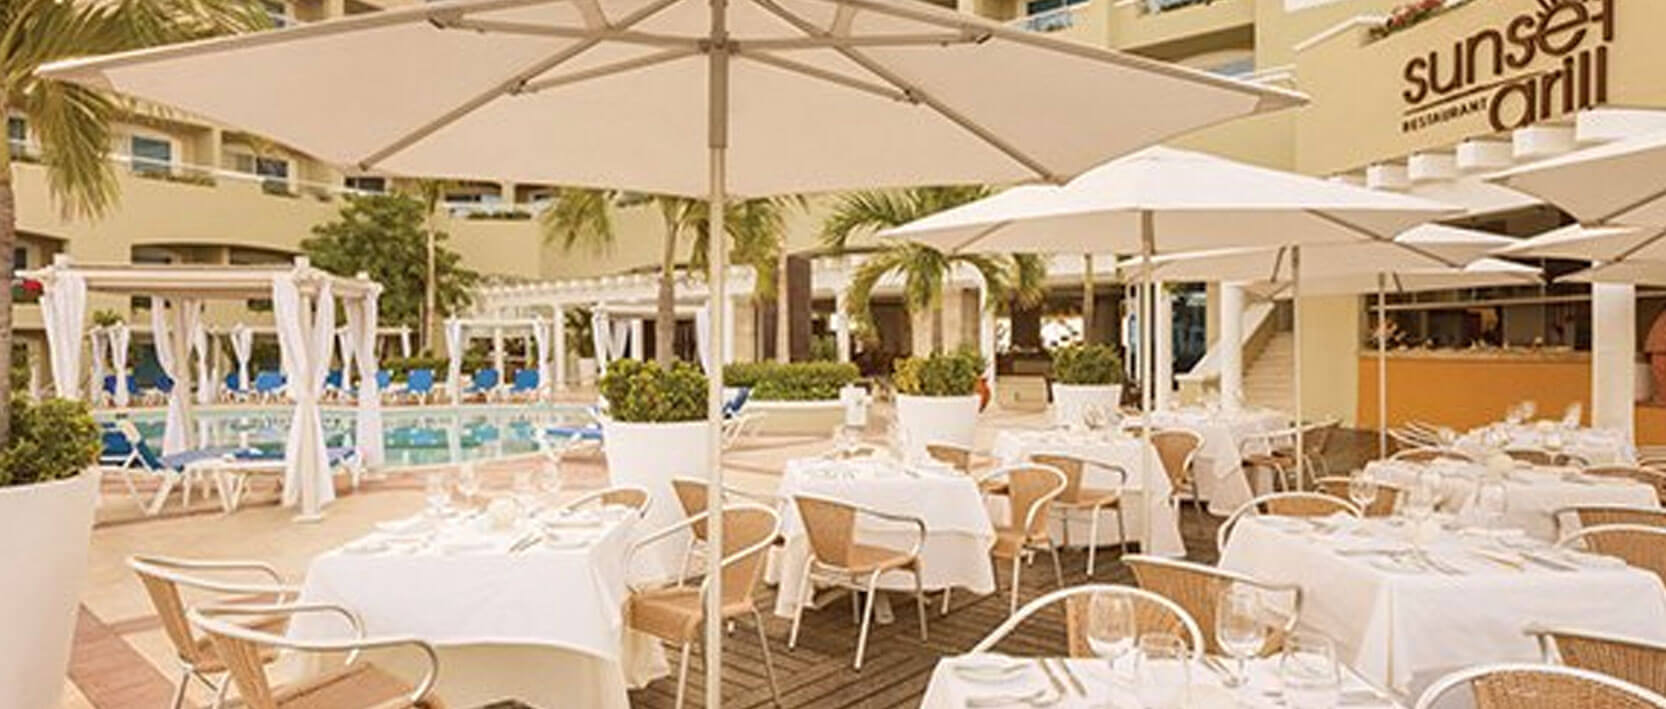 Gran Caribe Cancun Restaurants and Bars - At Sunset